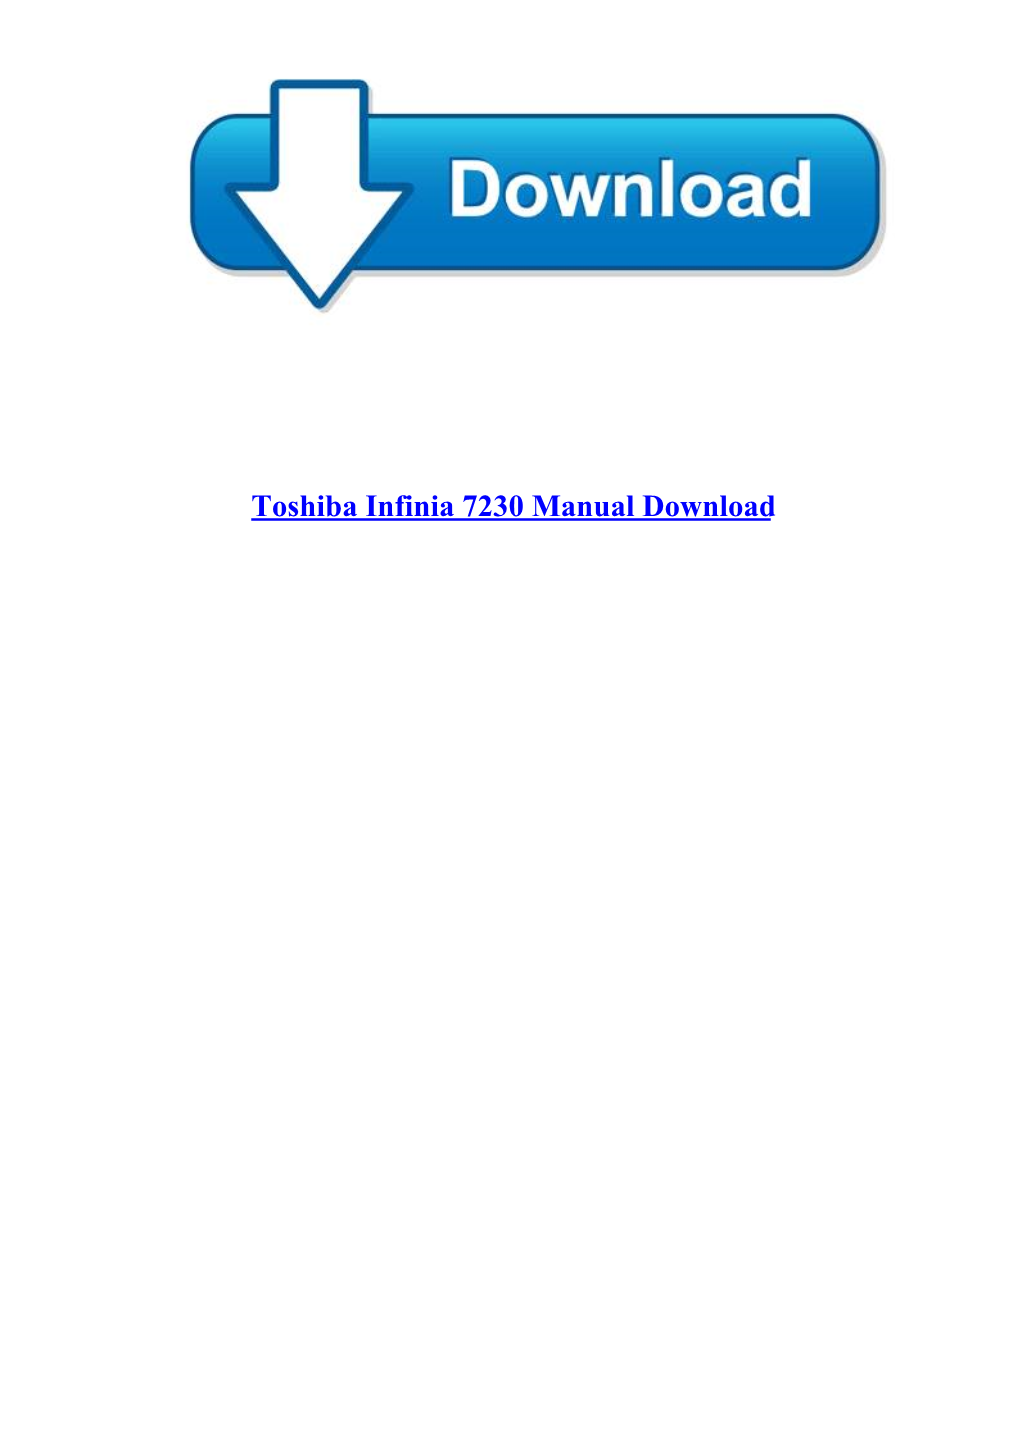 [Catalog E-Book PDF] Toshiba Infinia 7230 Manual